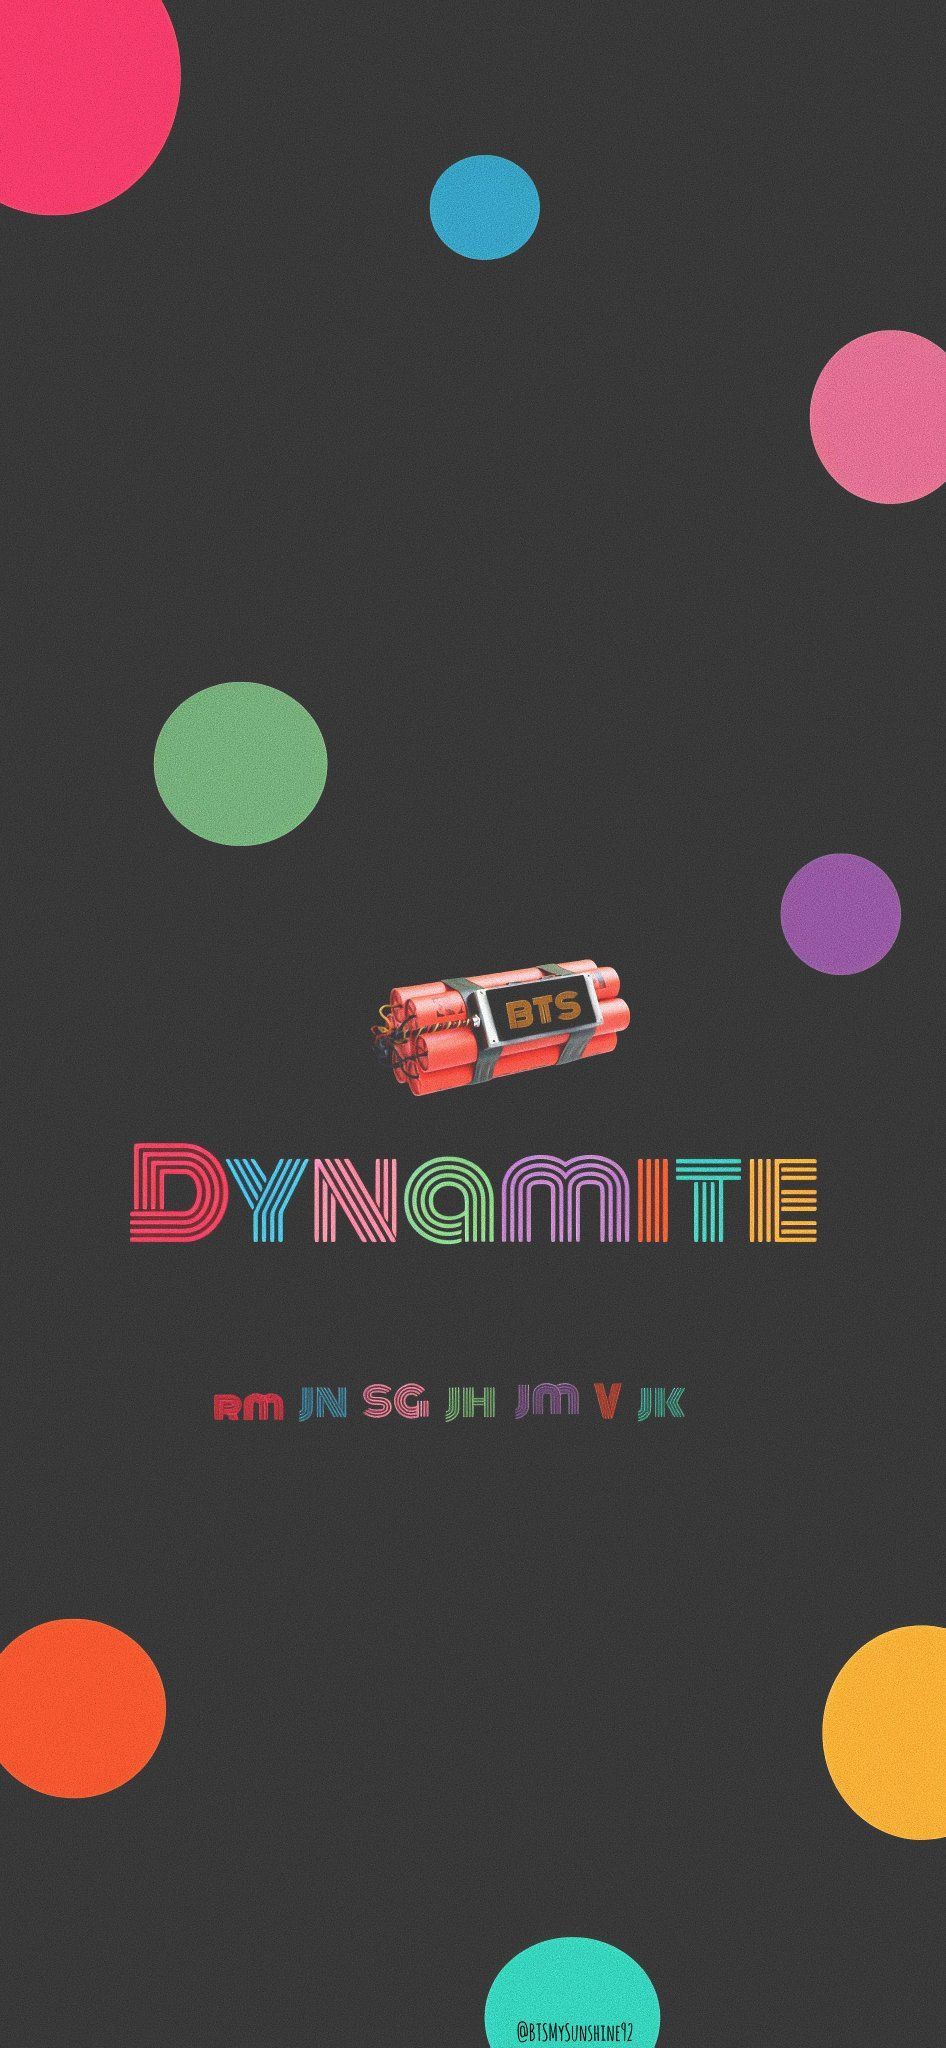 Dynamite Bts Wallpaper